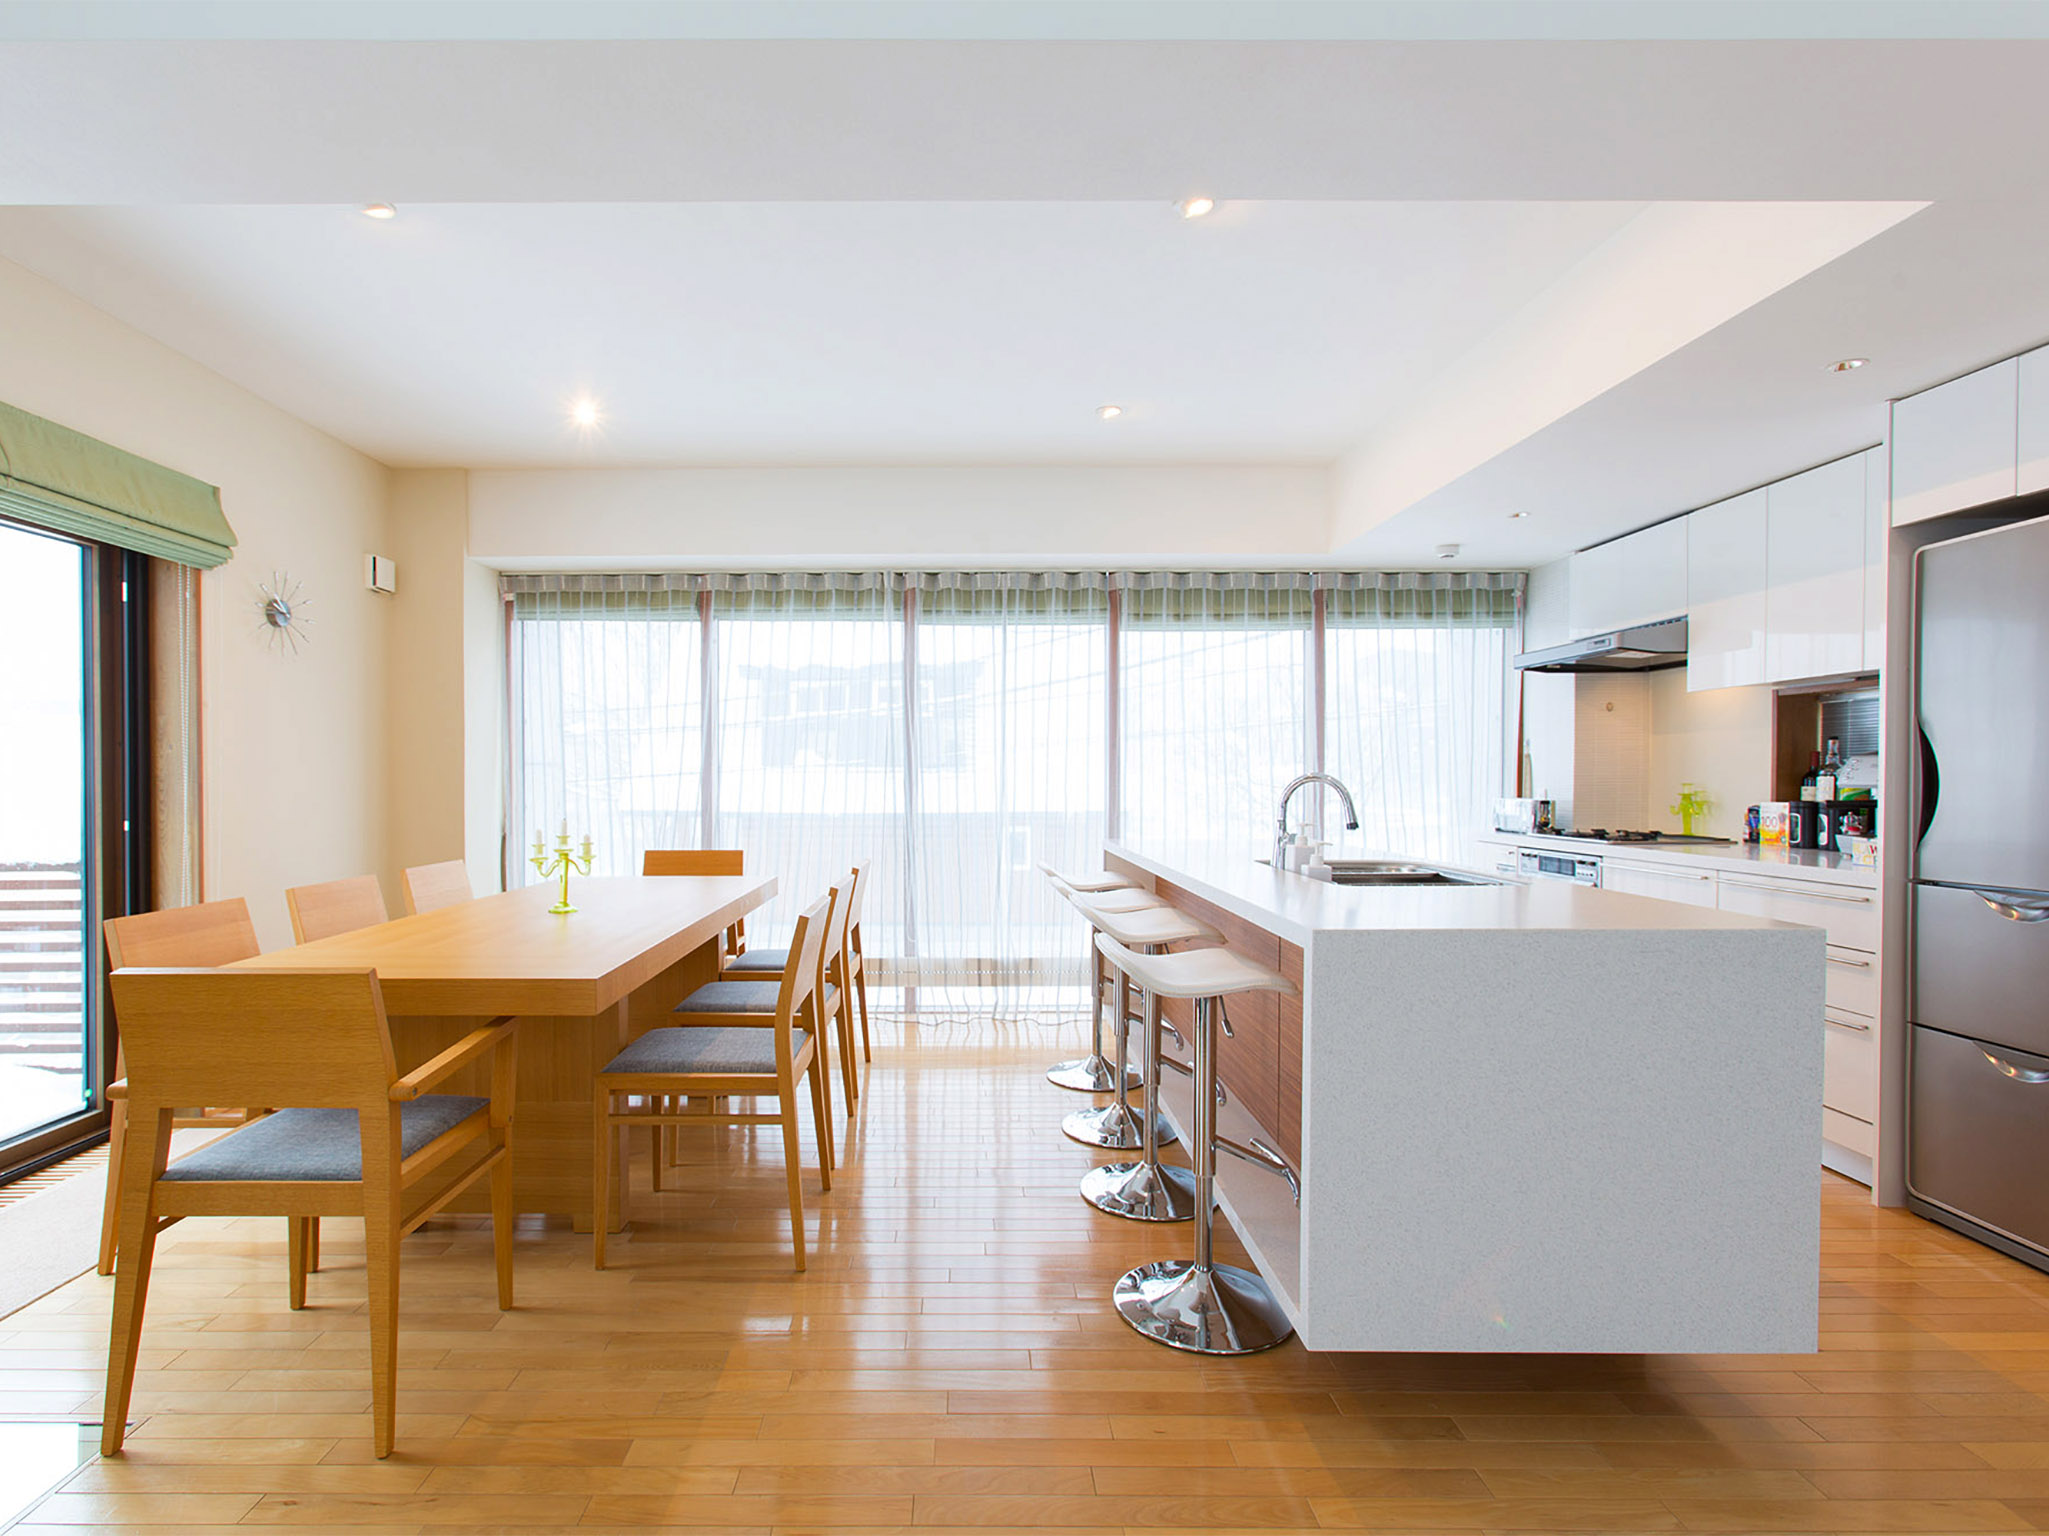 Kita Kitsune Chalet - Gorgeous kitchen and dining area layout